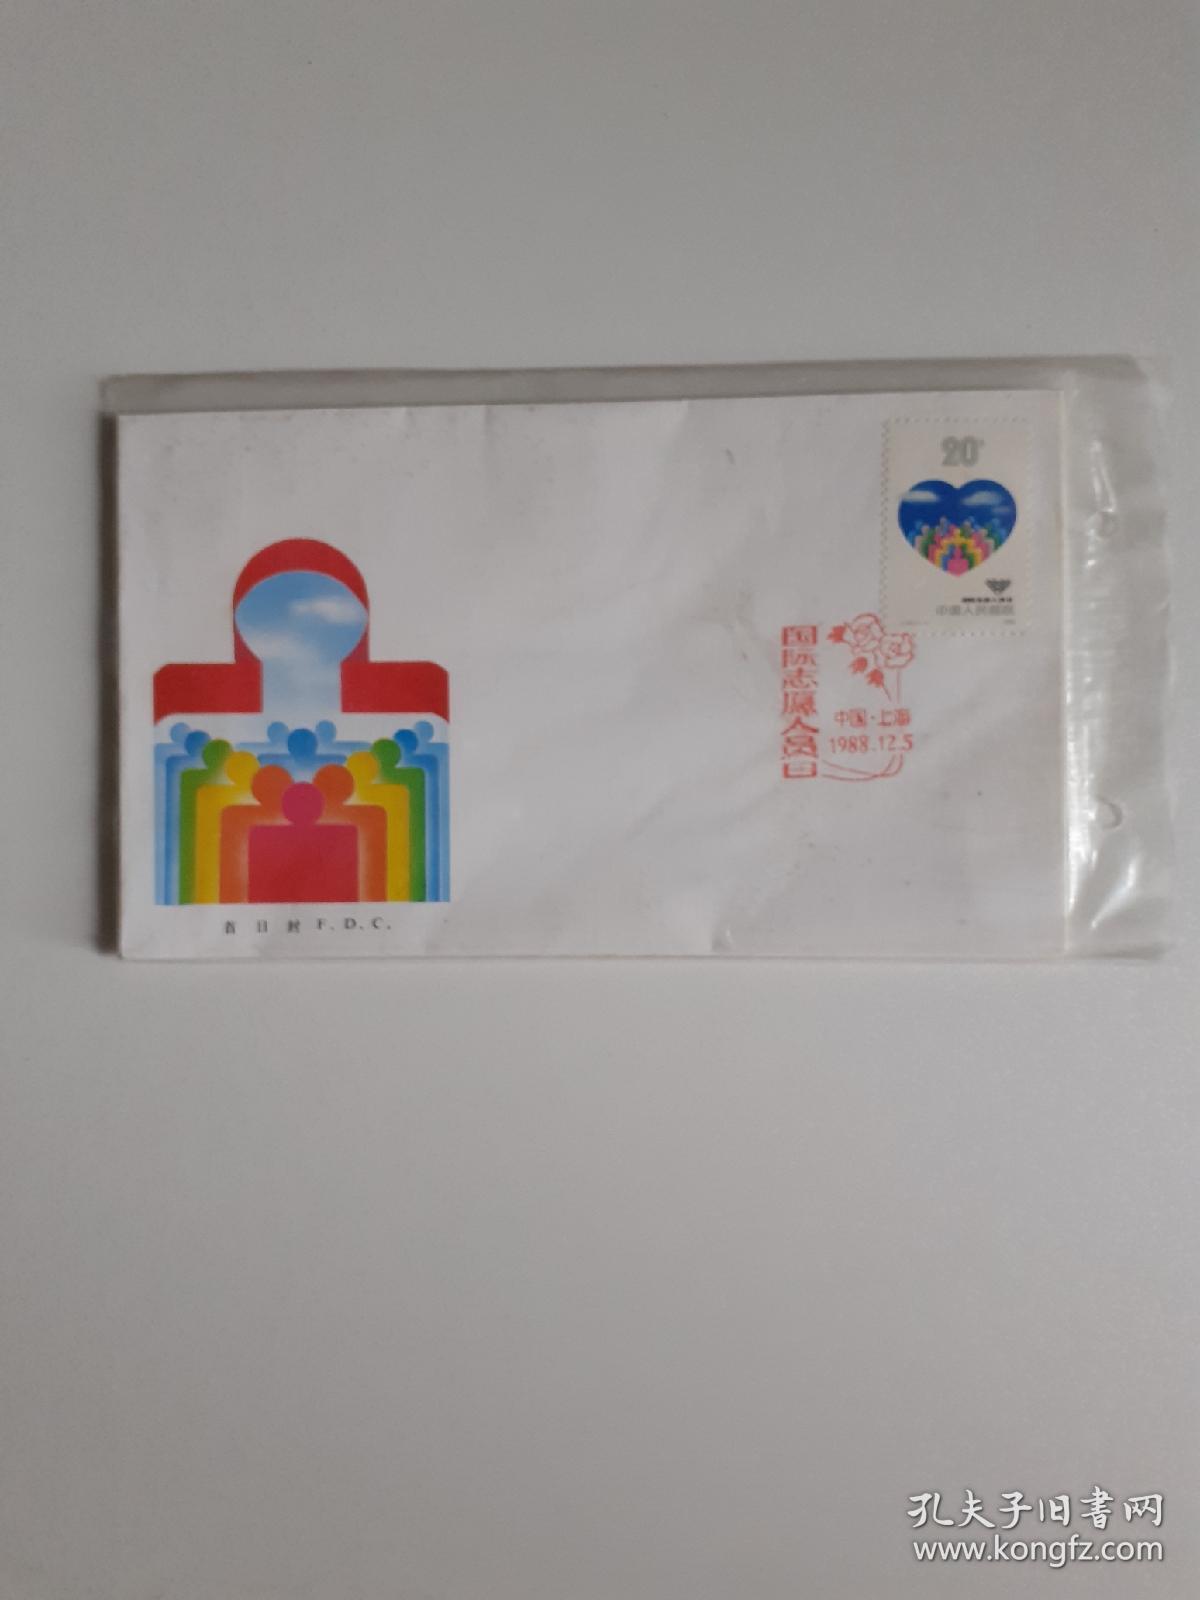 J156《志愿者》总公司首日封（上海红戳），江浙沪皖包邮。